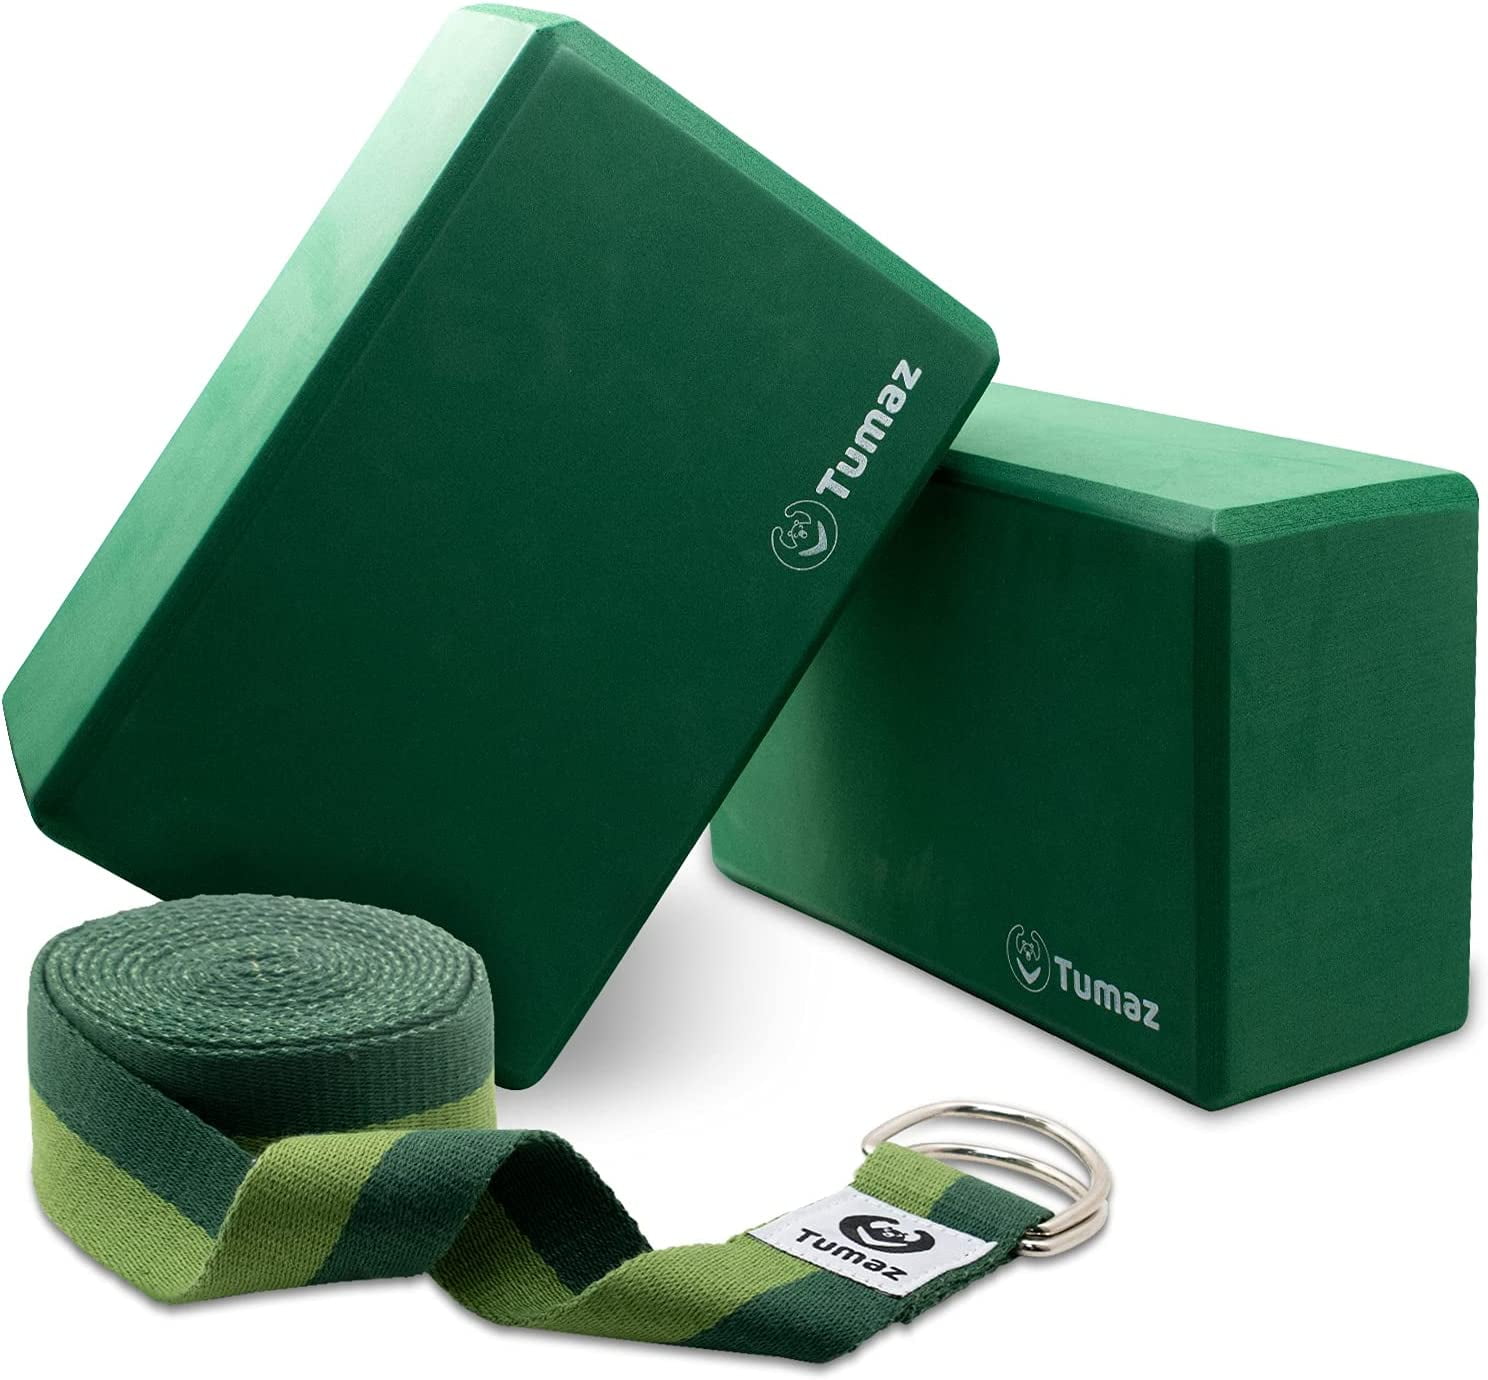 Tumaz Yoga Blocks 2 Pack with Strap, Lightweight Foam Yoga Blocks, Green 